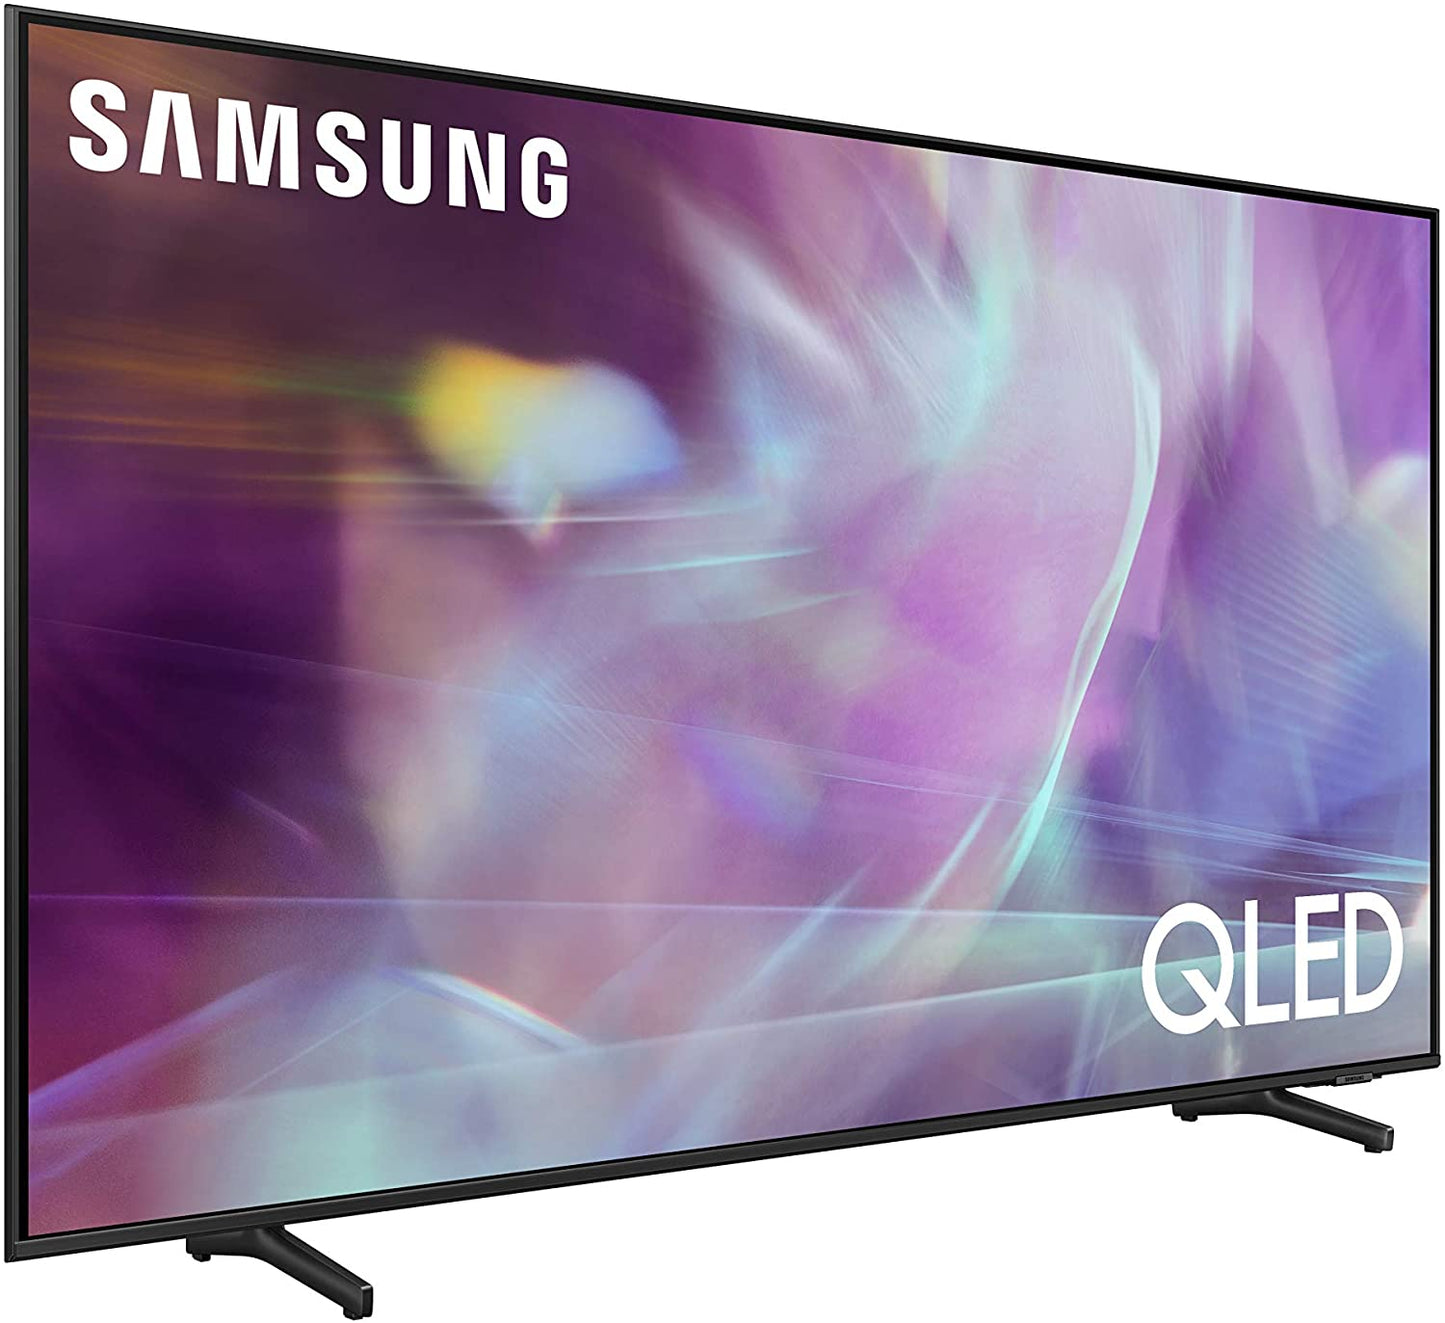 Samsung 55-in Q60A QLED Smart LED TV QN55Q60AAFXZA (2021)